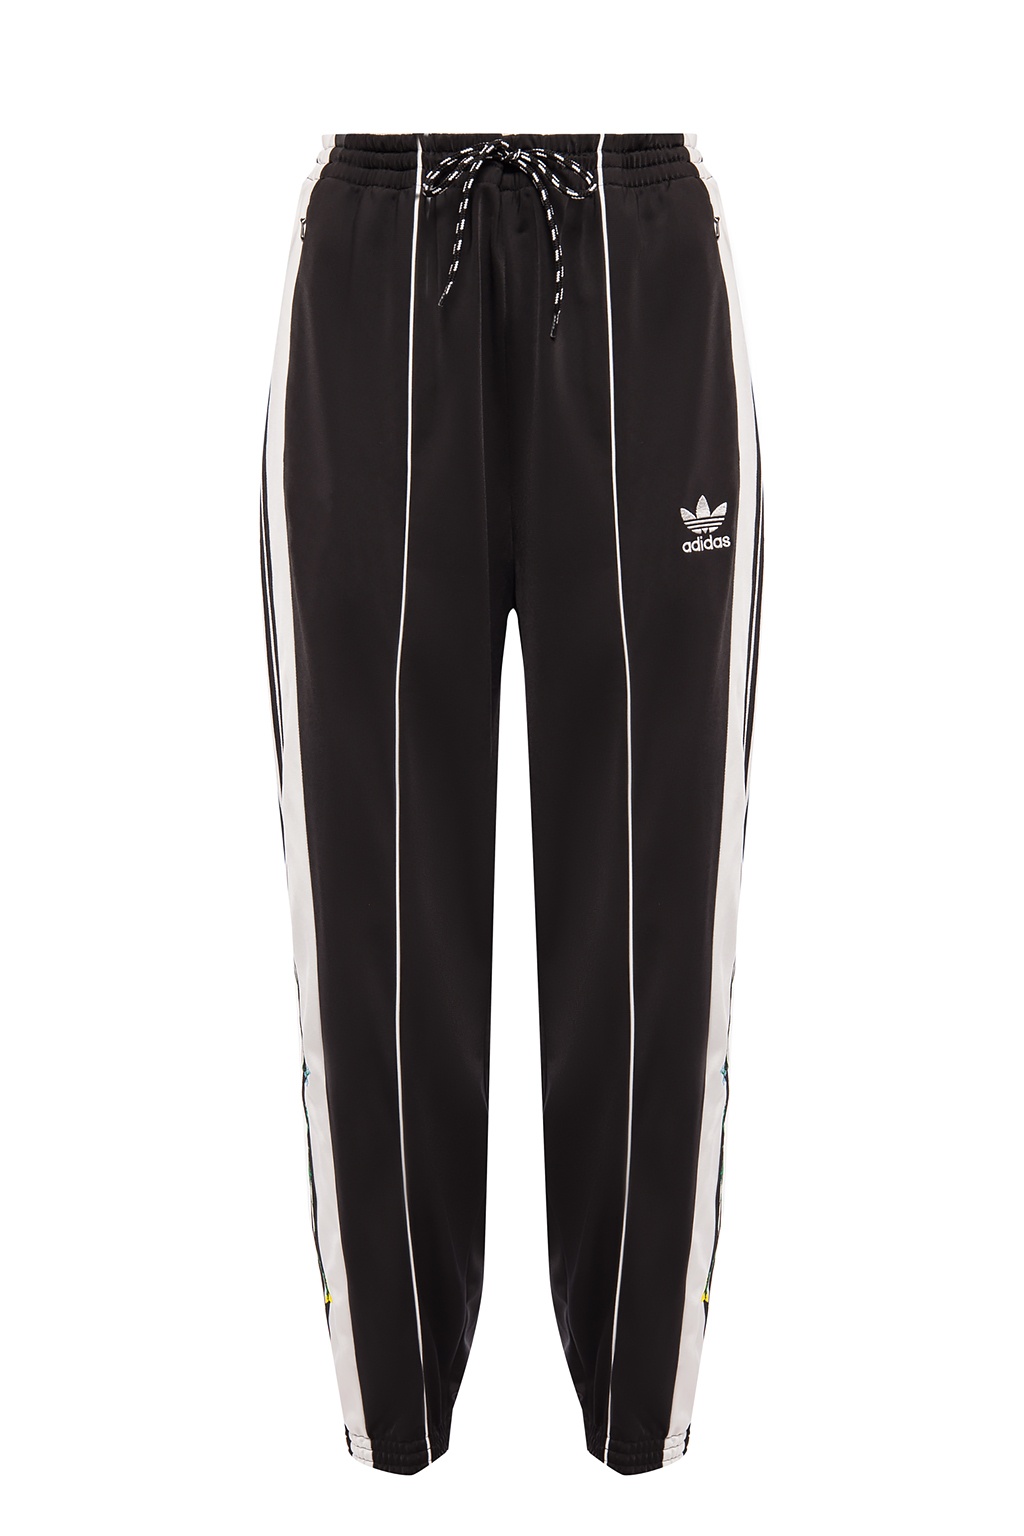 adidas Originals FLOWER PANTS - Tracksuit bottoms - black - Zalando.de